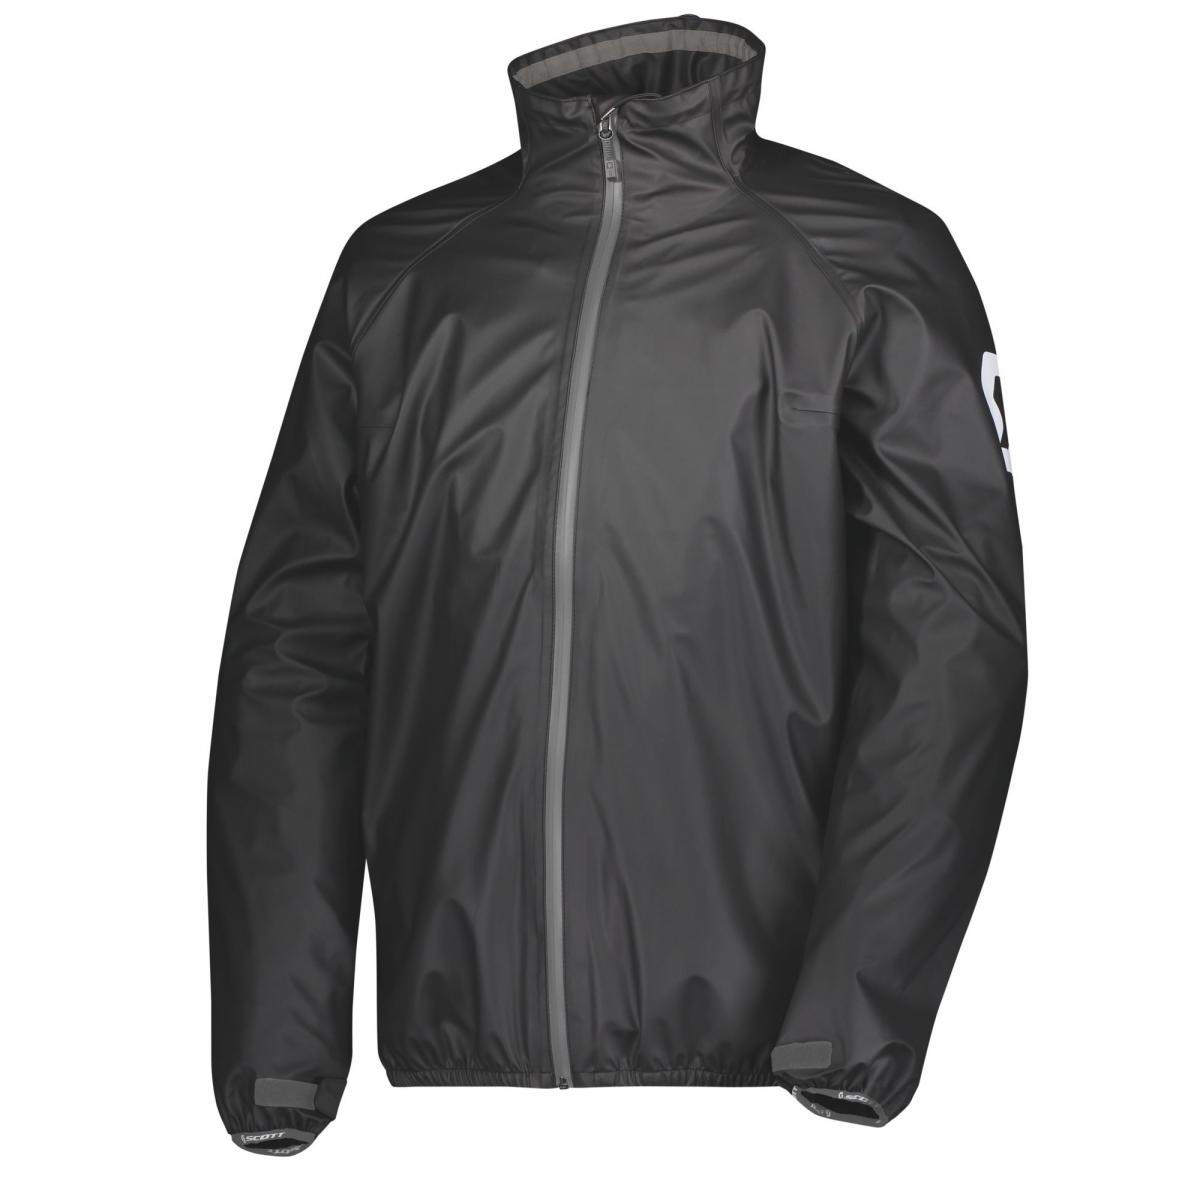 Scott Ergonomic Pro DP Motorcycle / Bicycle Rain Jacket - Black | eBay